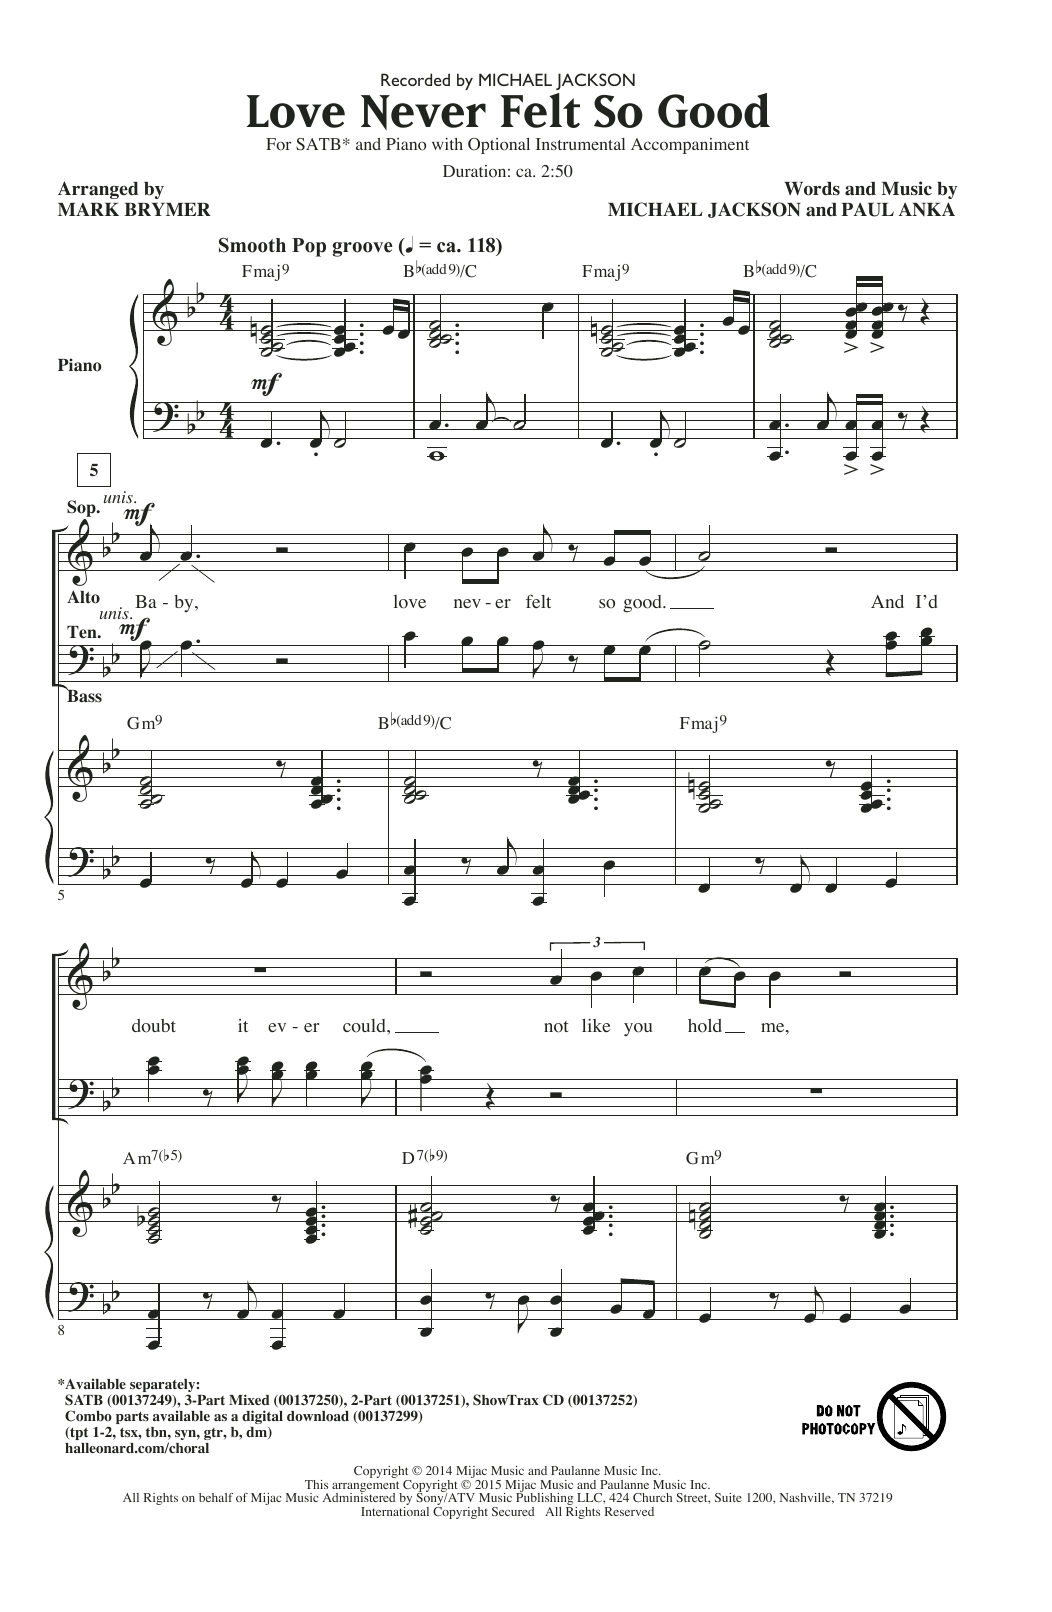 Michael Jackson Love Never Felt So Good (arr. Mark Brymer) Sheet Music Notes & Chords for 2-Part Choir - Download or Print PDF